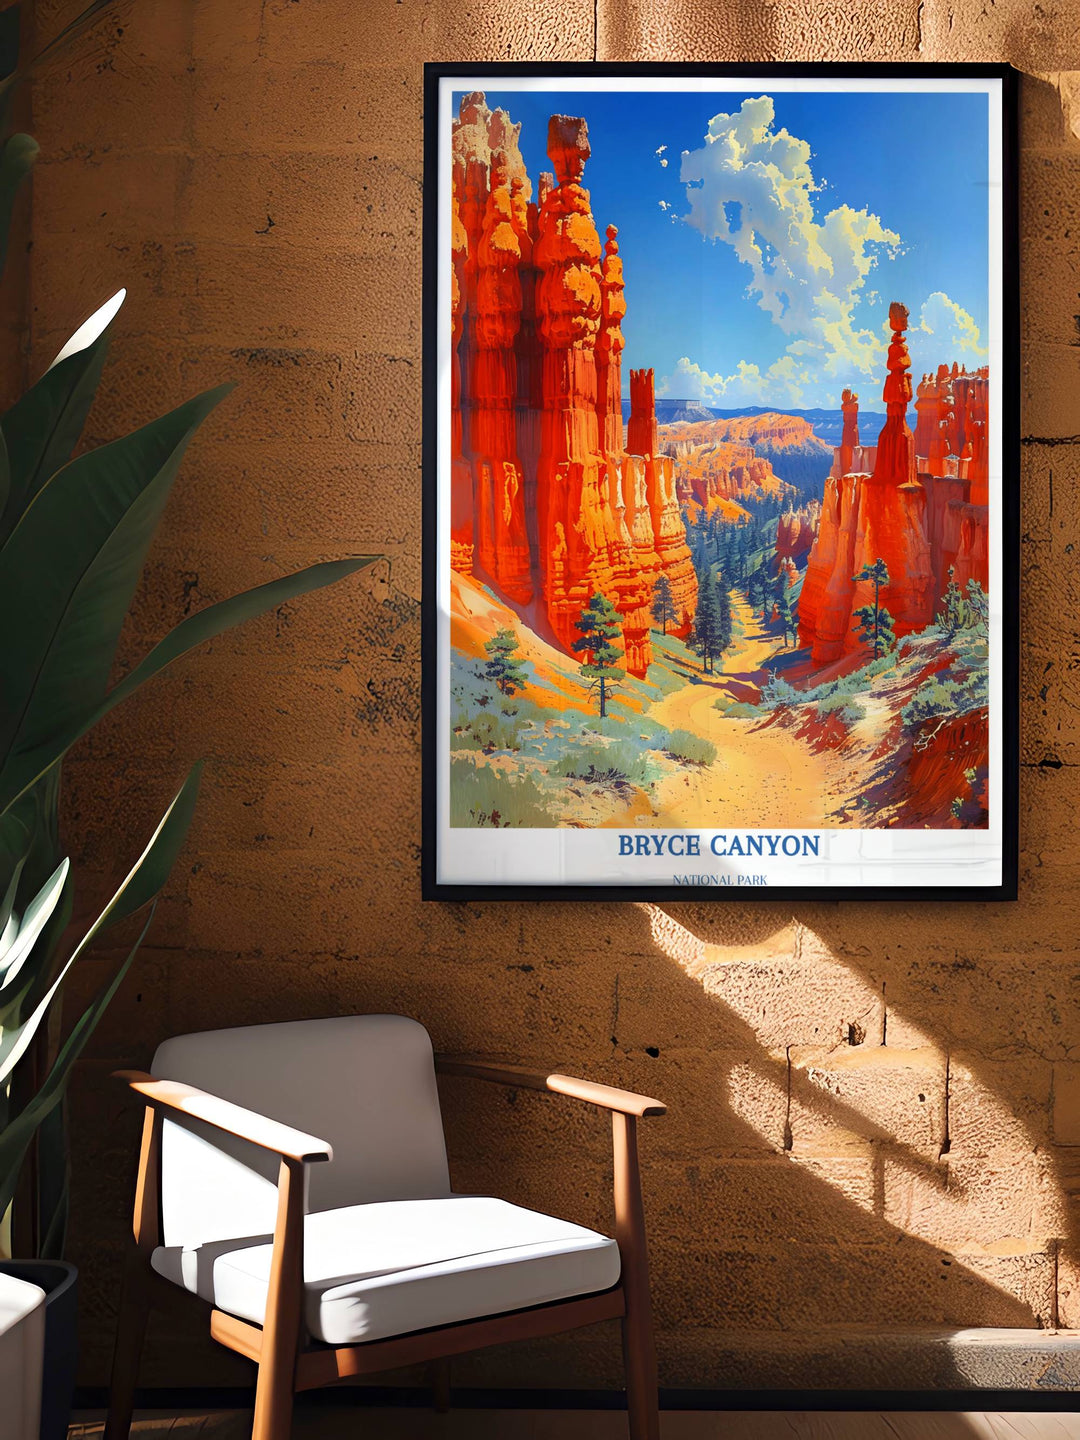 Bryce Canyon Utah - Affiche du parc national - Cadeau du parc national - Bryce Canyon Park - Desert Wall Art